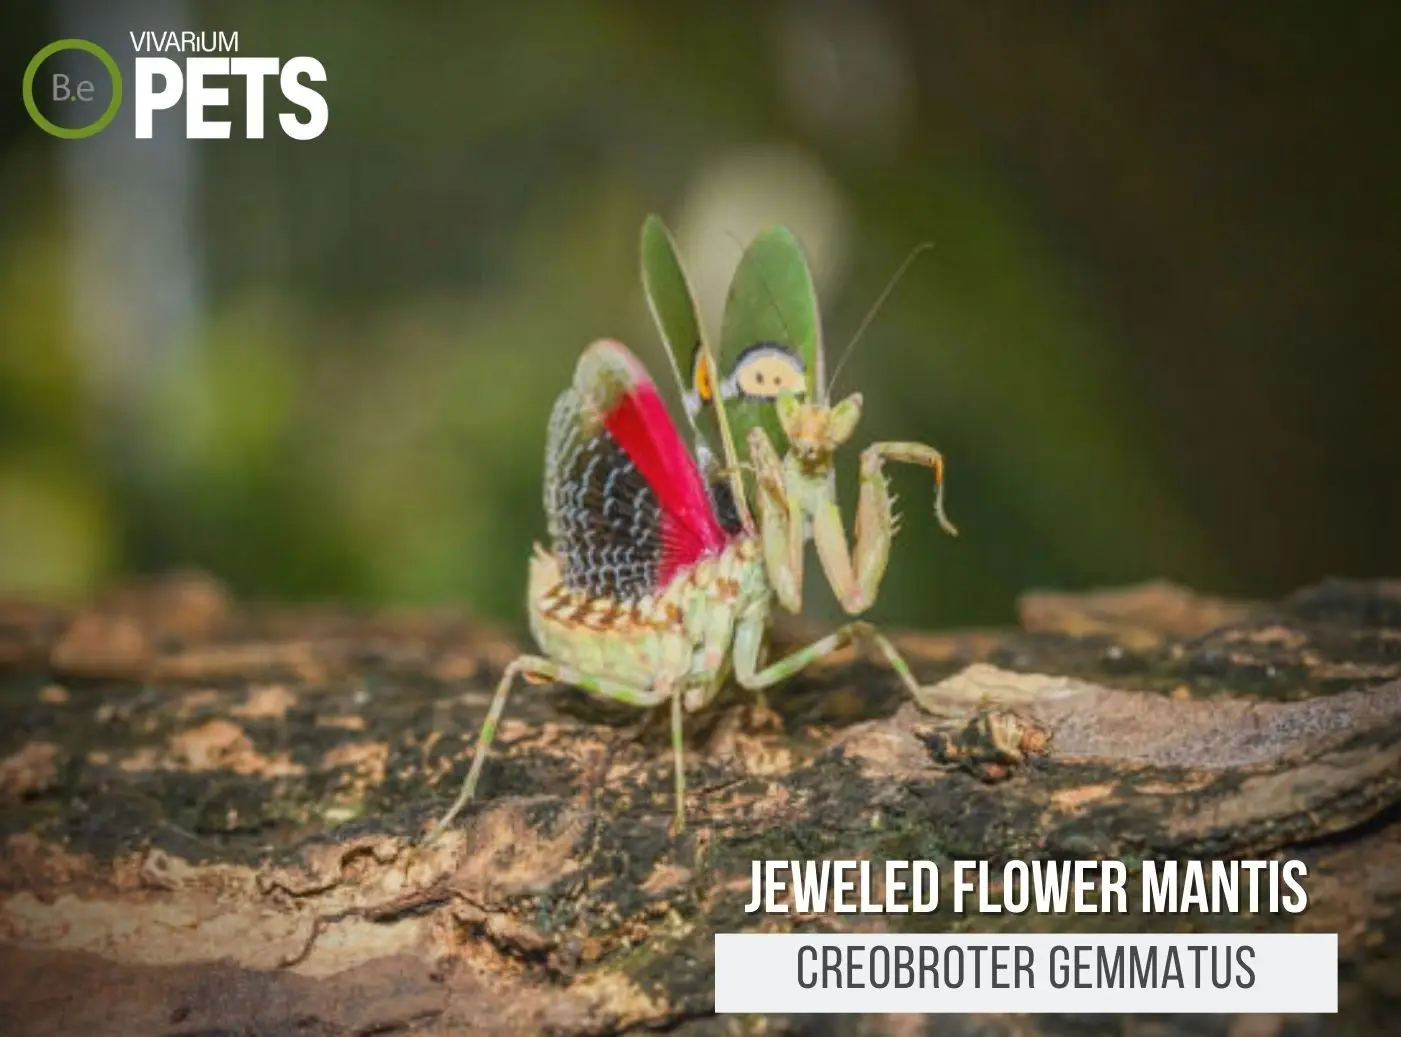 Creobroter gemmatus: Jeweled Flower Mantis Care Guide